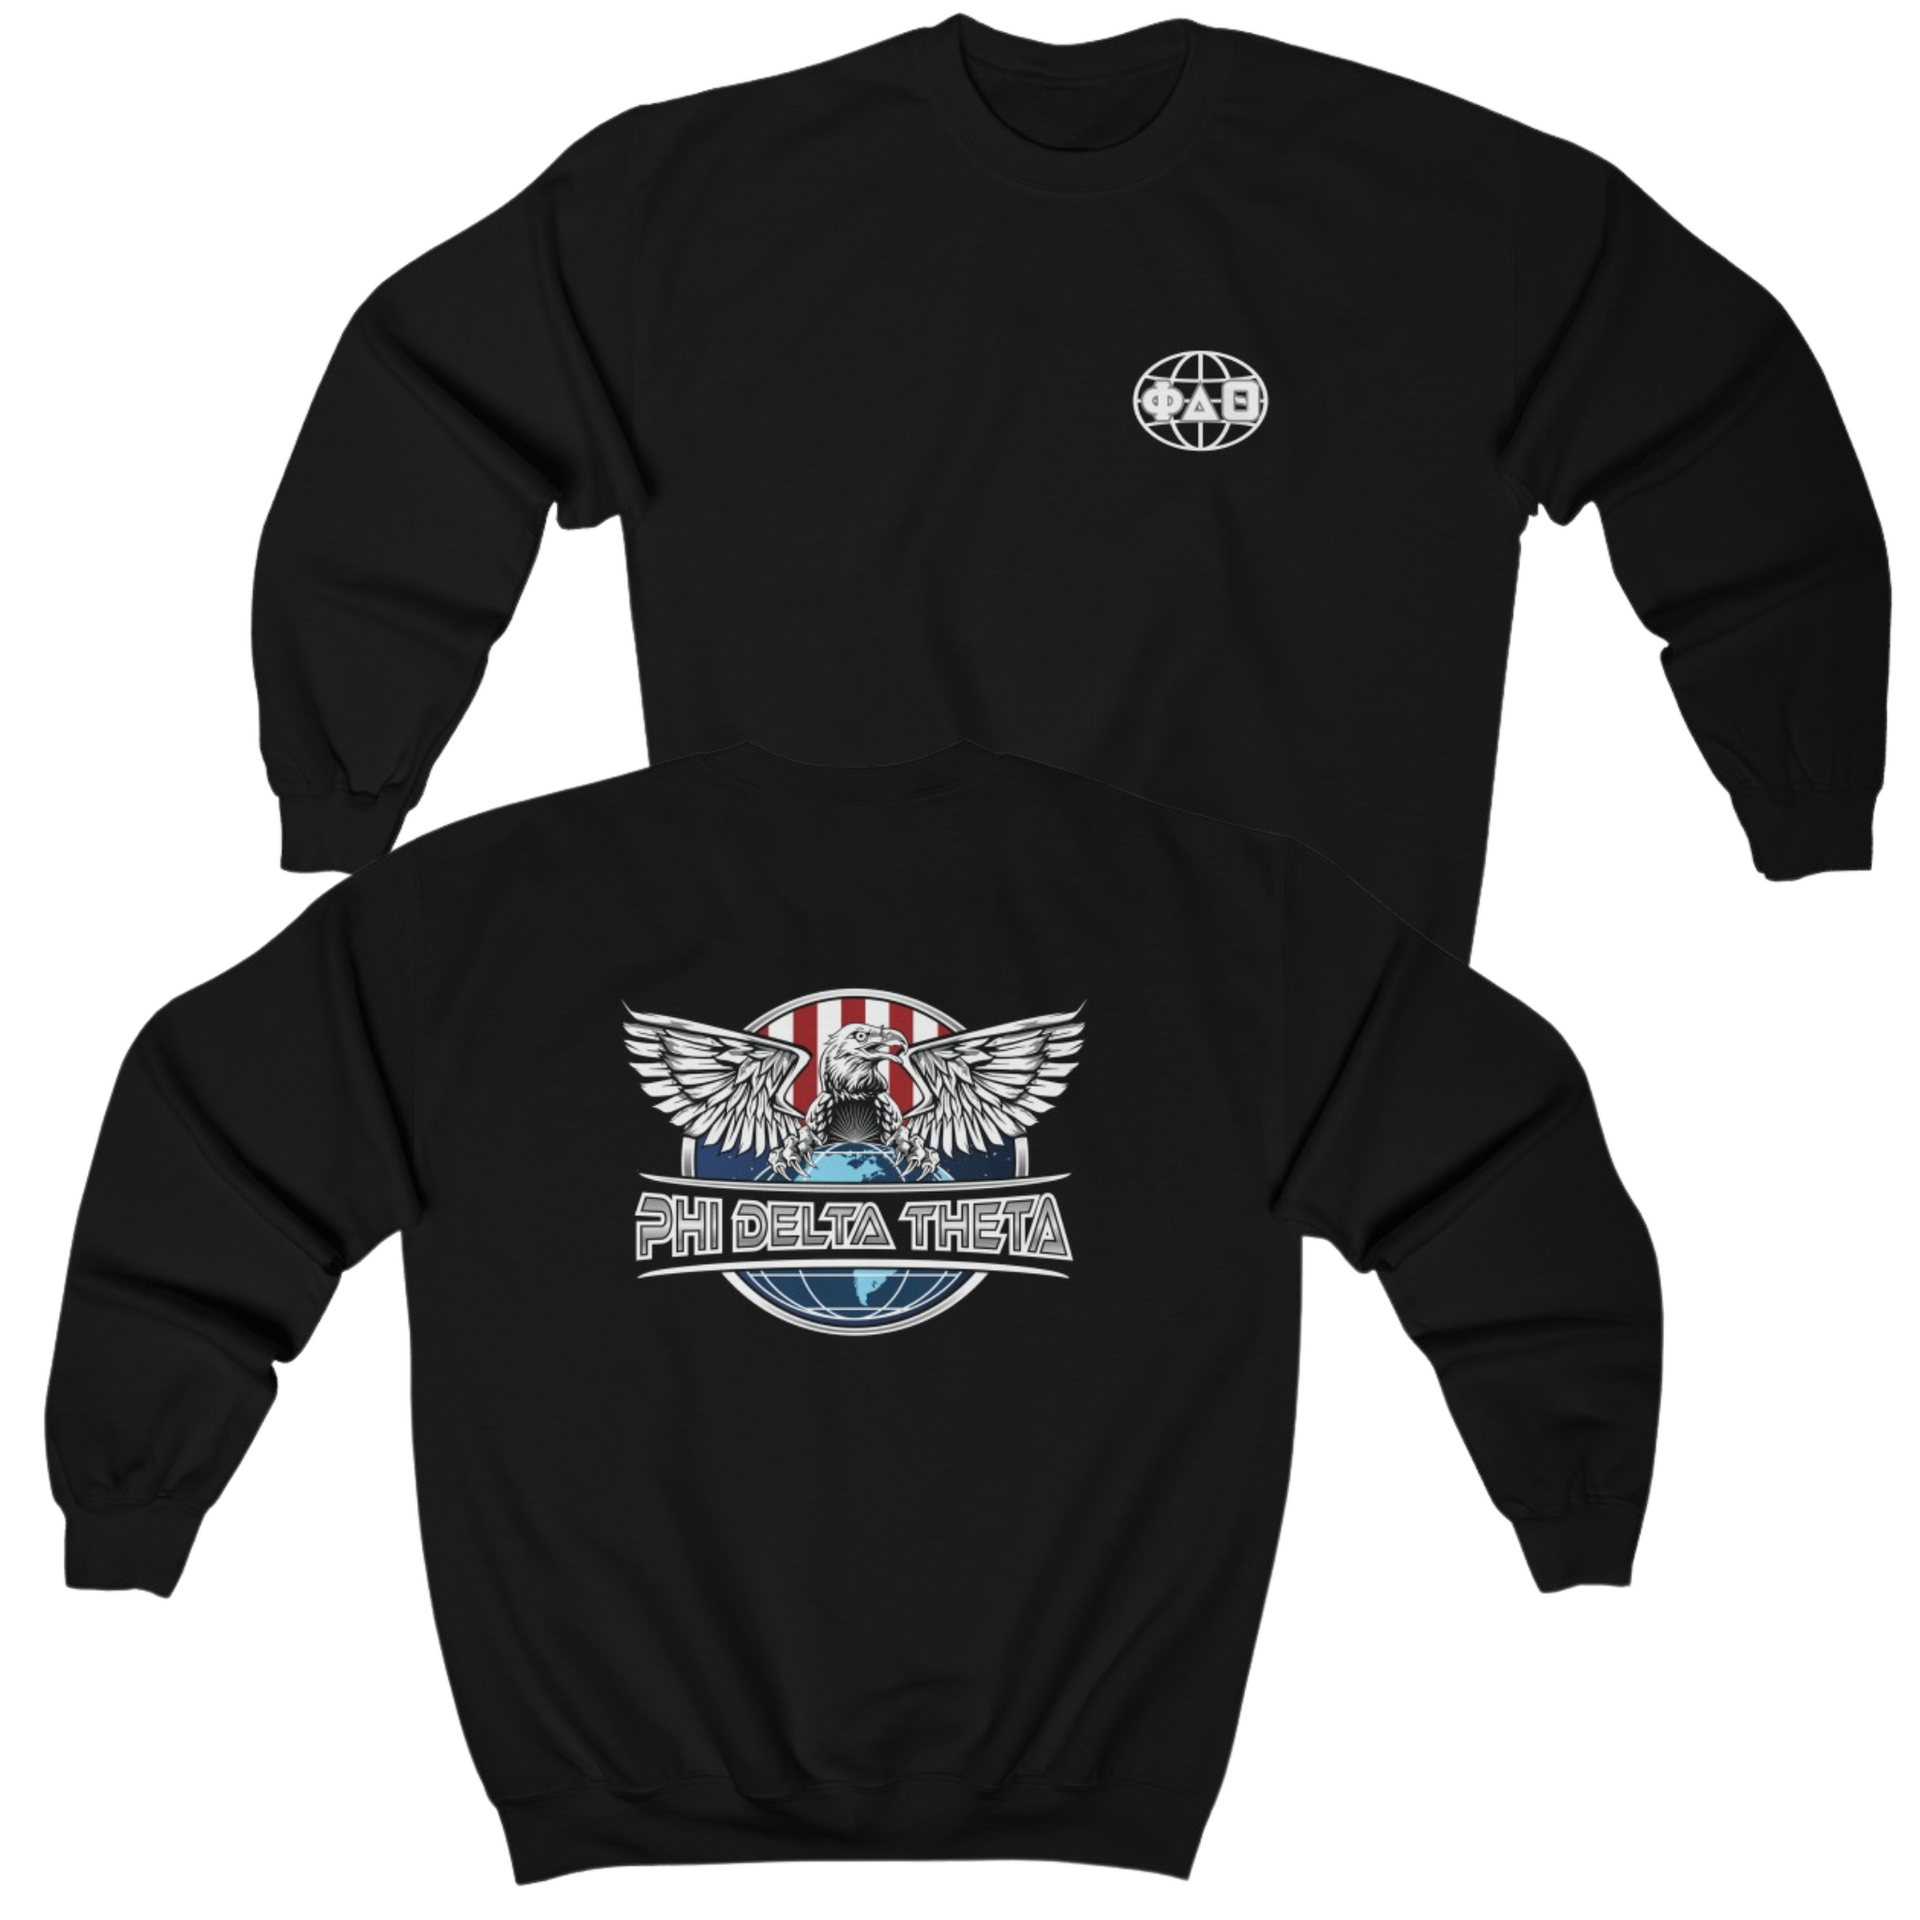 Black Phi Delta Theta Graphic Crewneck Sweatshirt | The Fraternal Order | phi delta theta fraternity greek apparel 